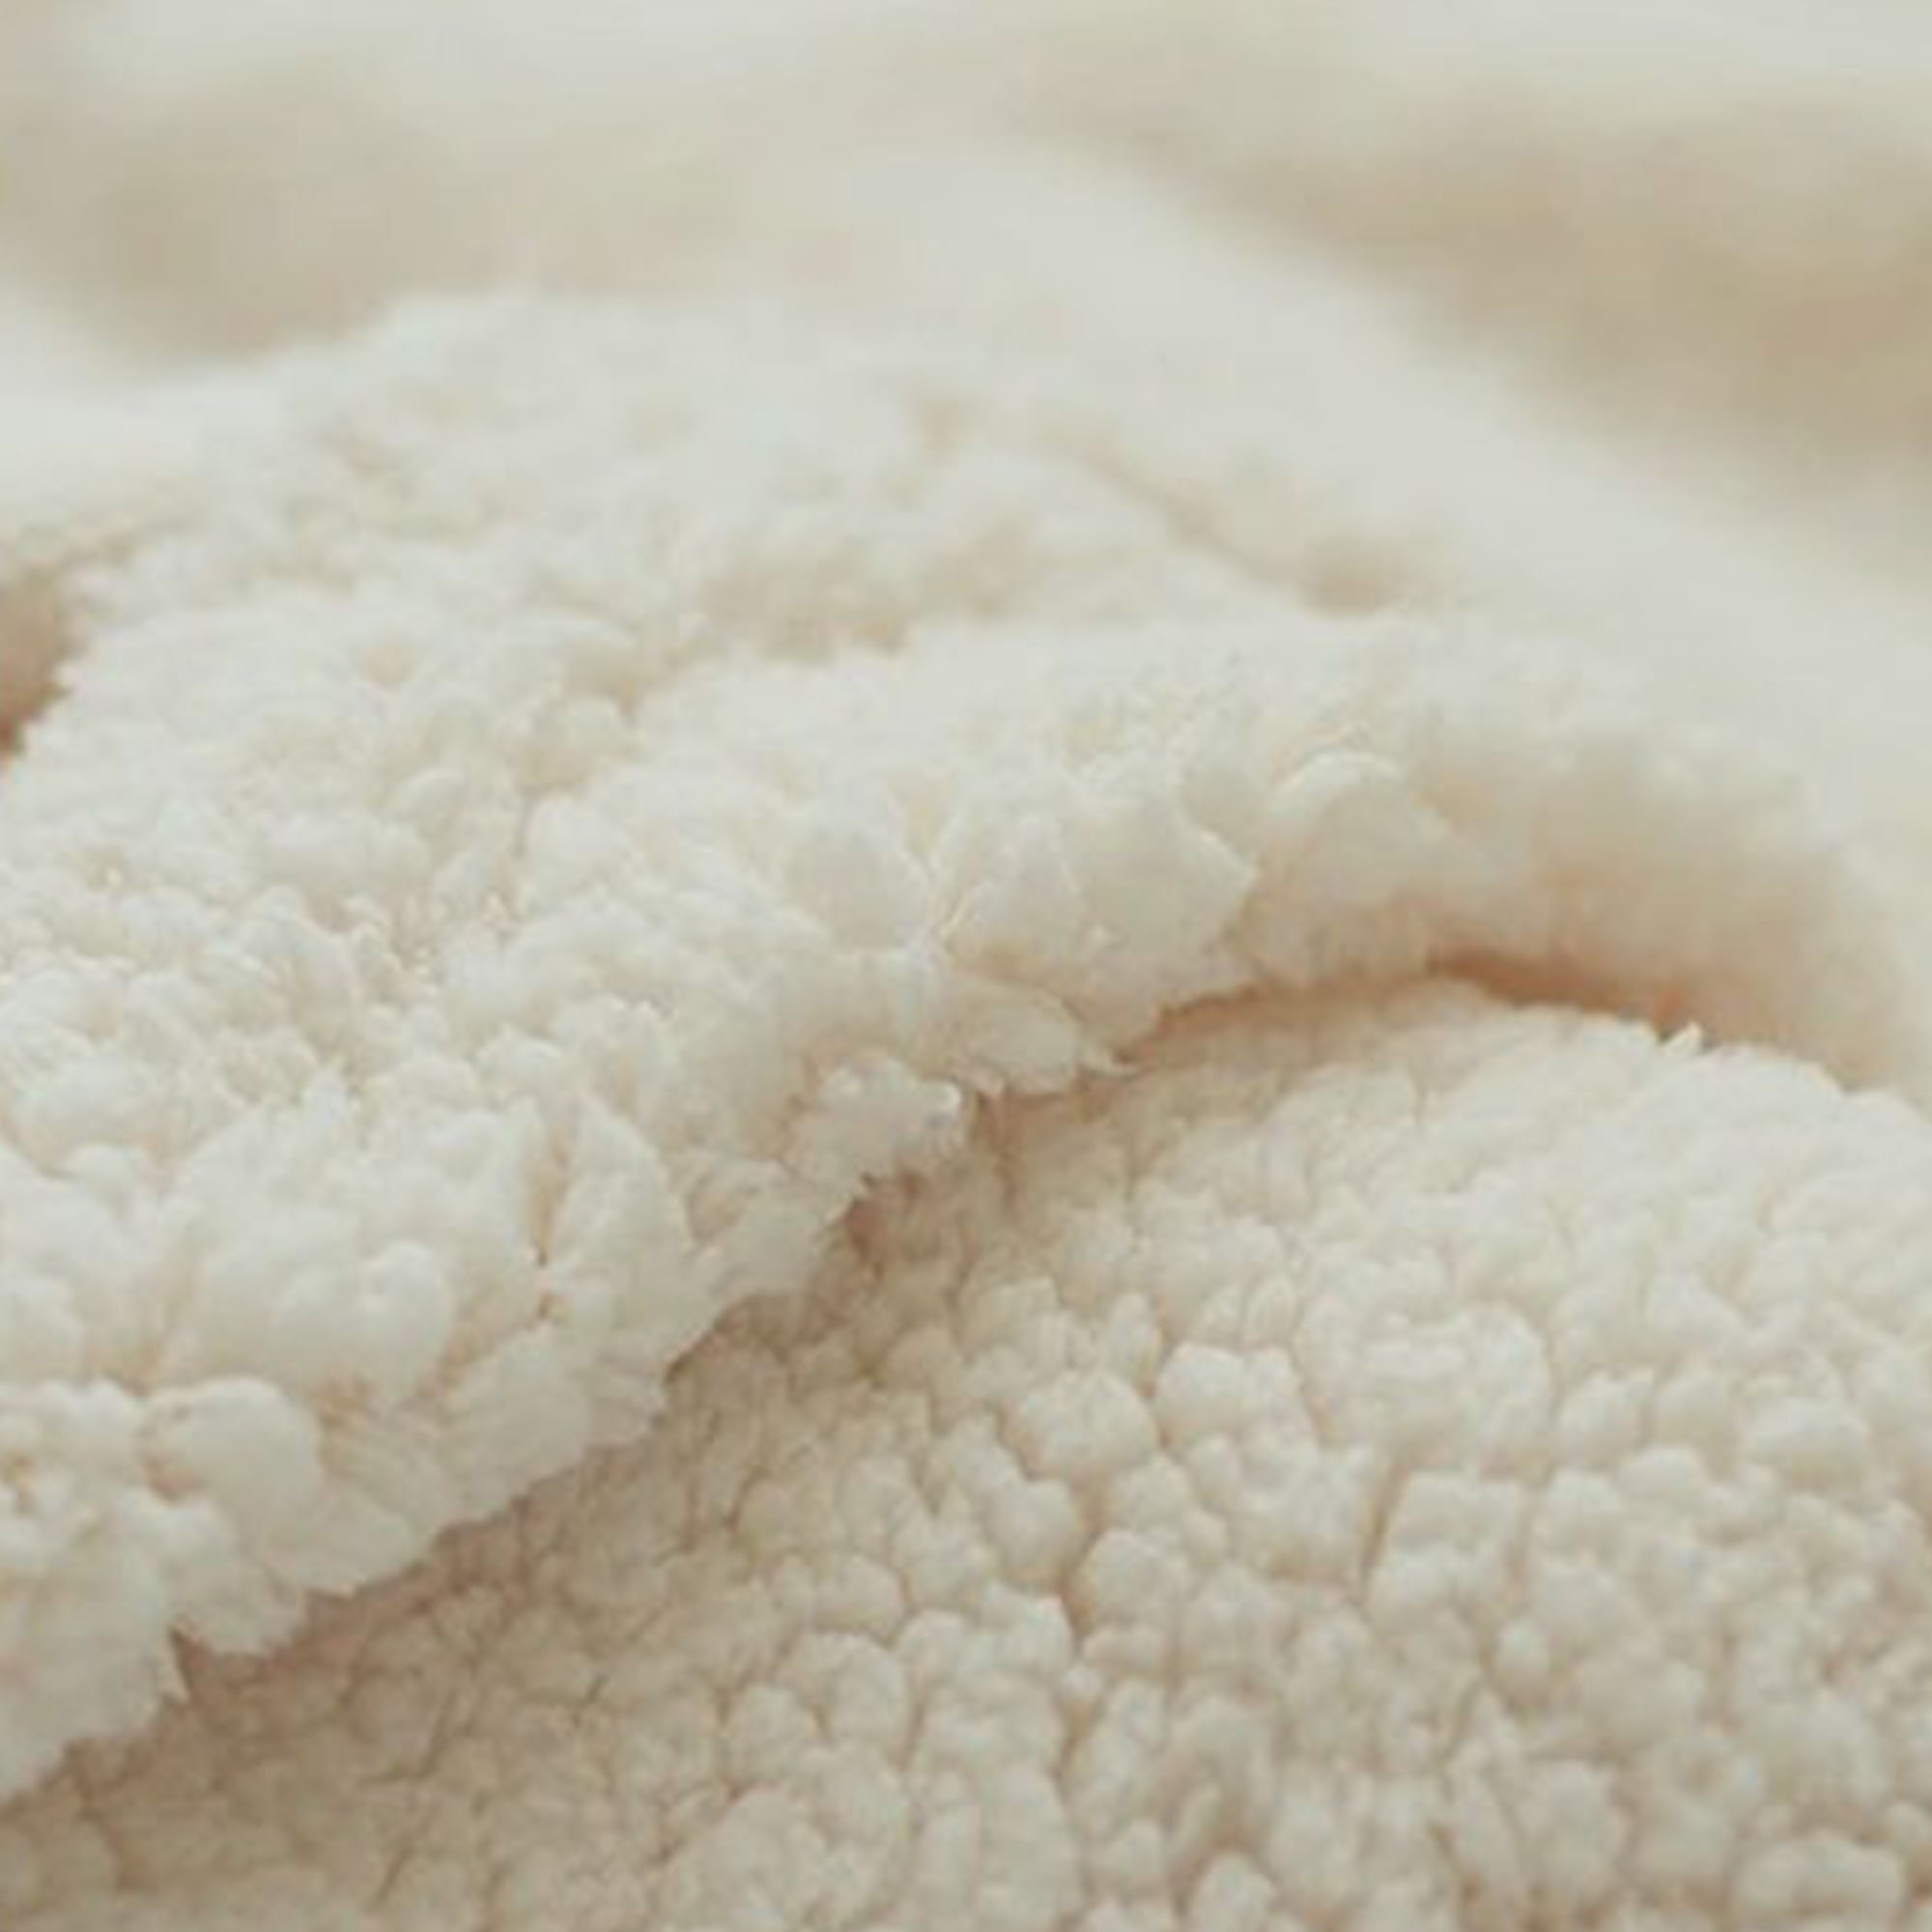 Sherpa Fleece Fabric Super Soft Stretch Material Home Decor Upholstery  Dressmaking - 64/165 cm Wide - CREAM - Lush Fabric